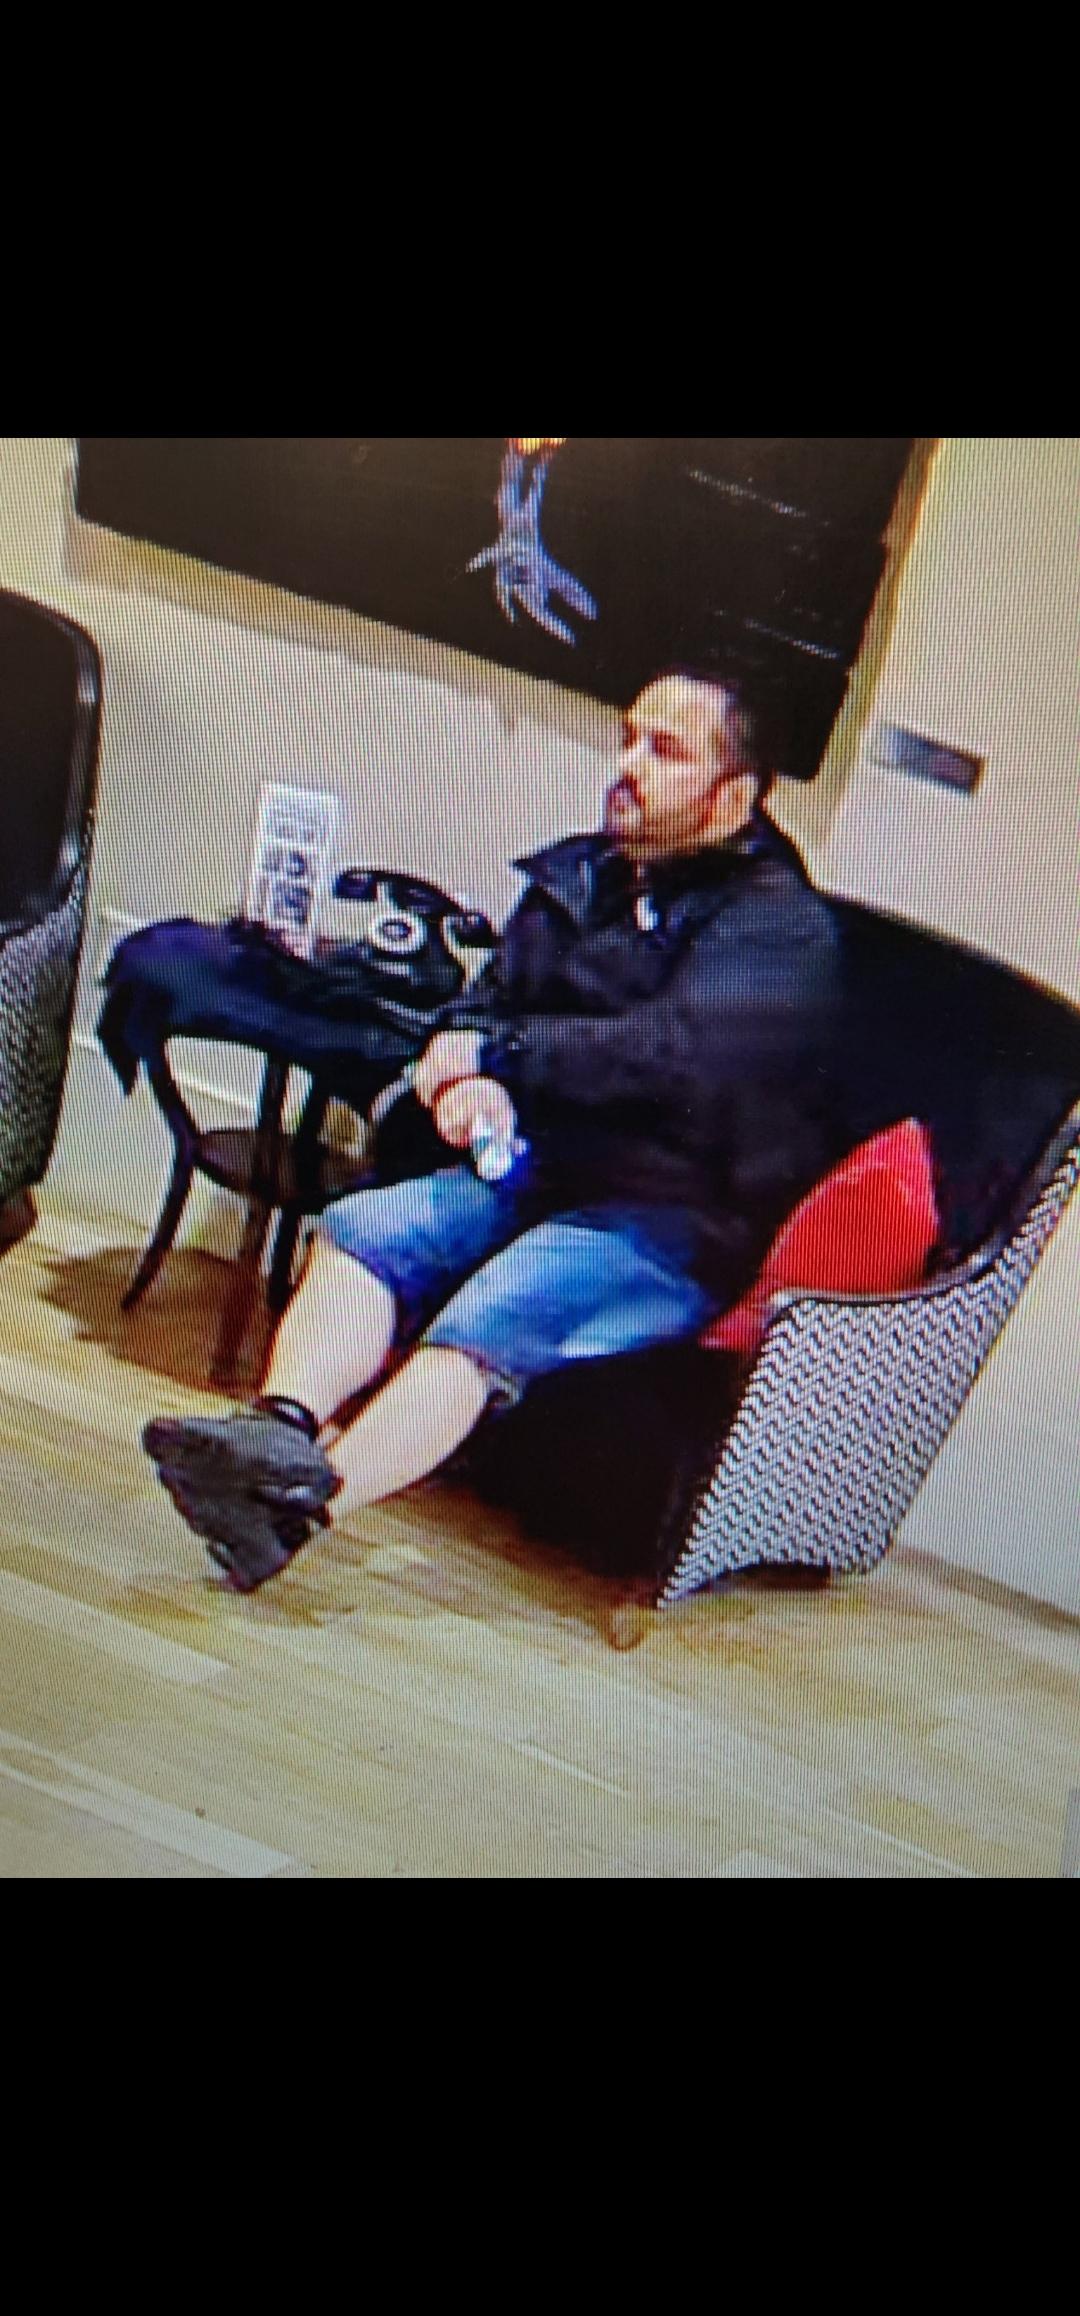 Photo of Joe Harker in a chair, on surveillance footage